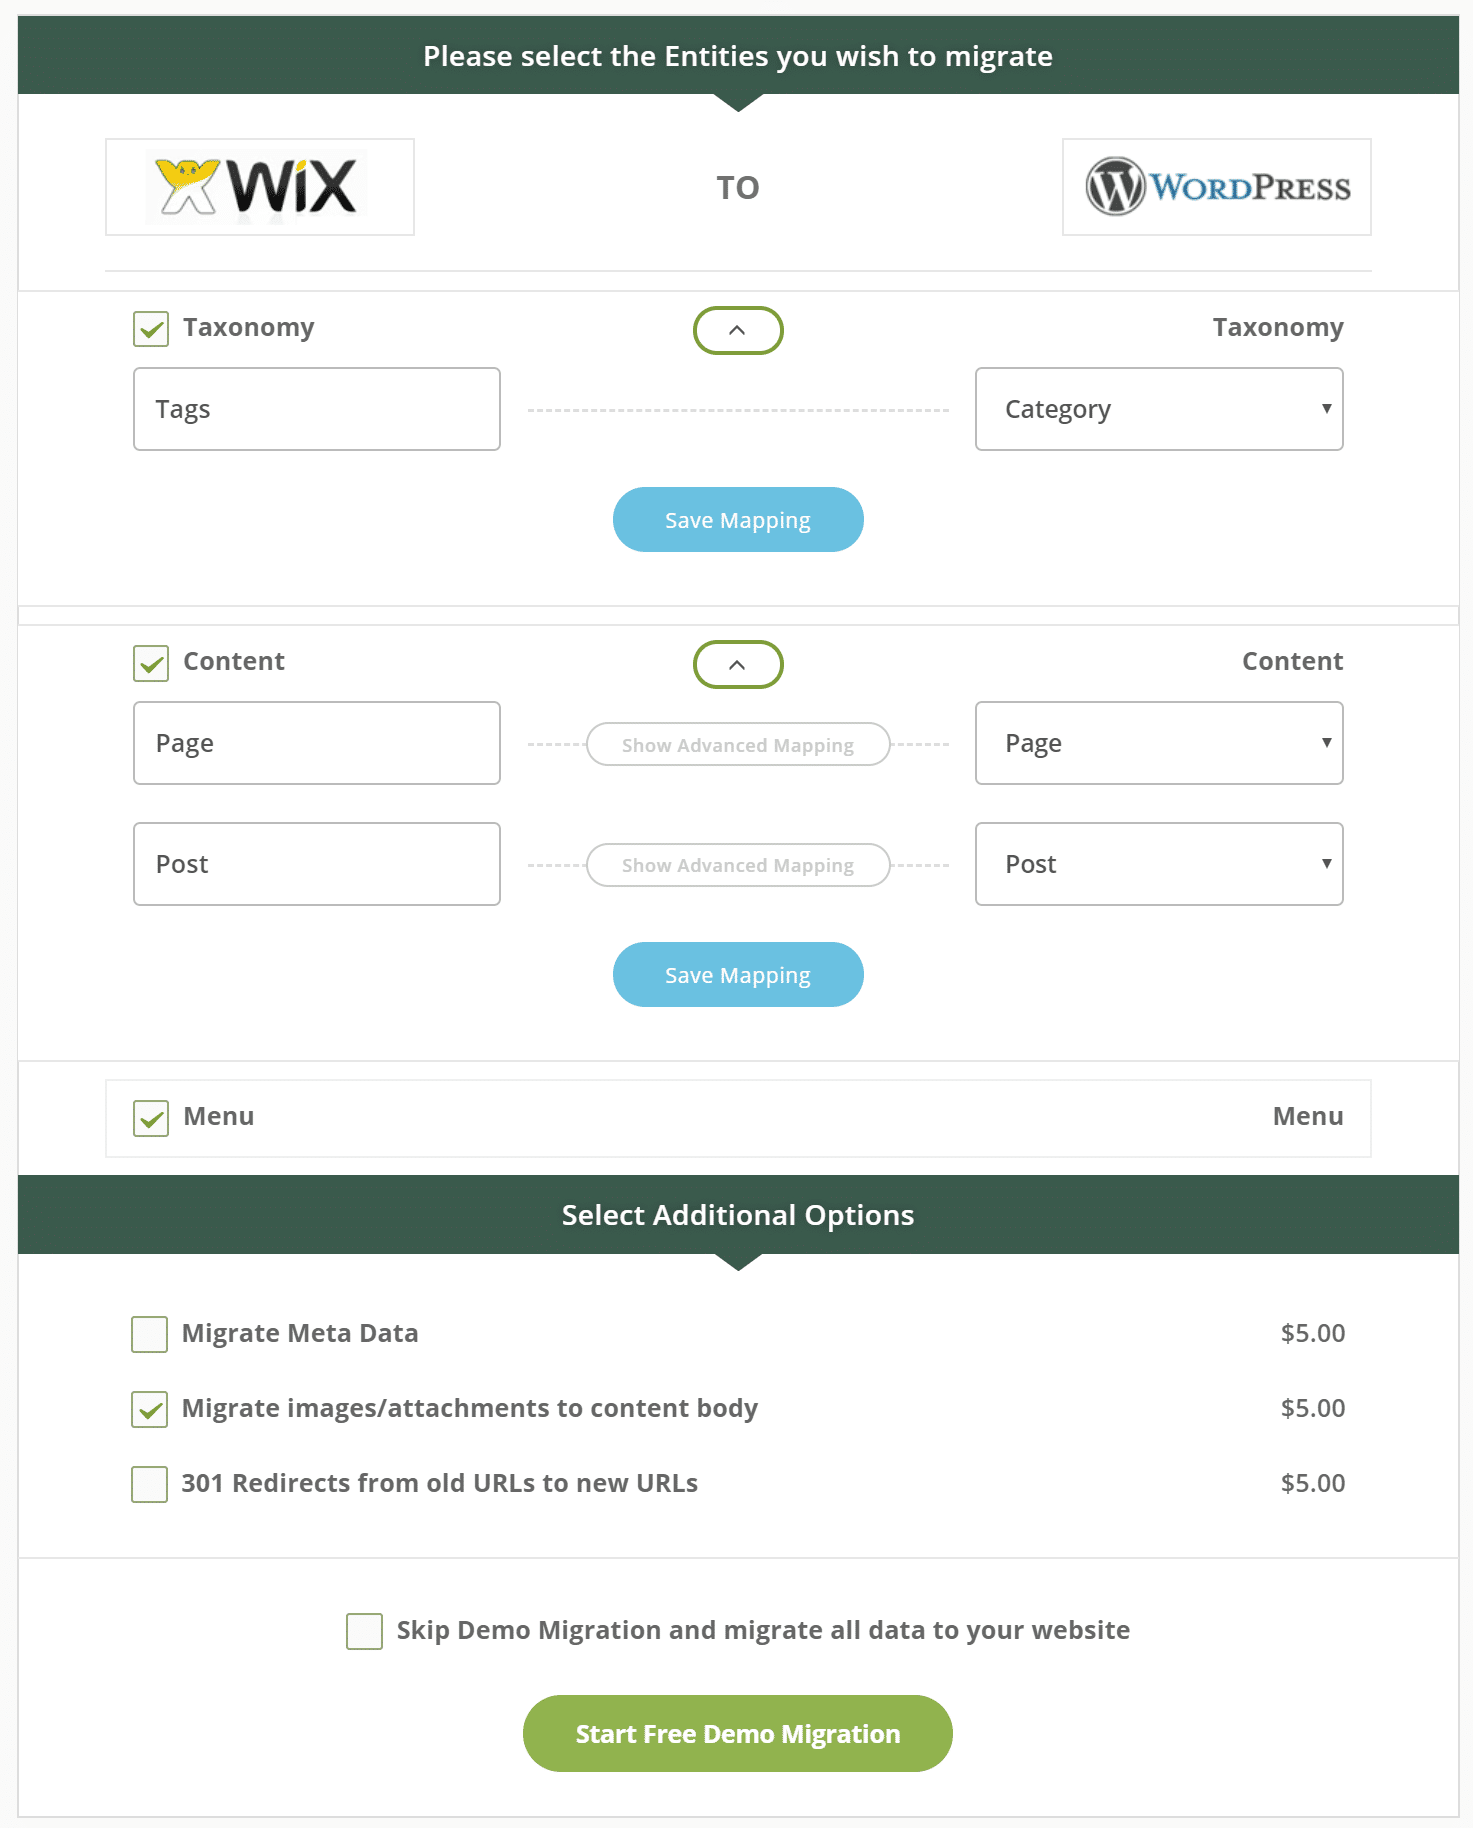 Wix to WordPress migration entities